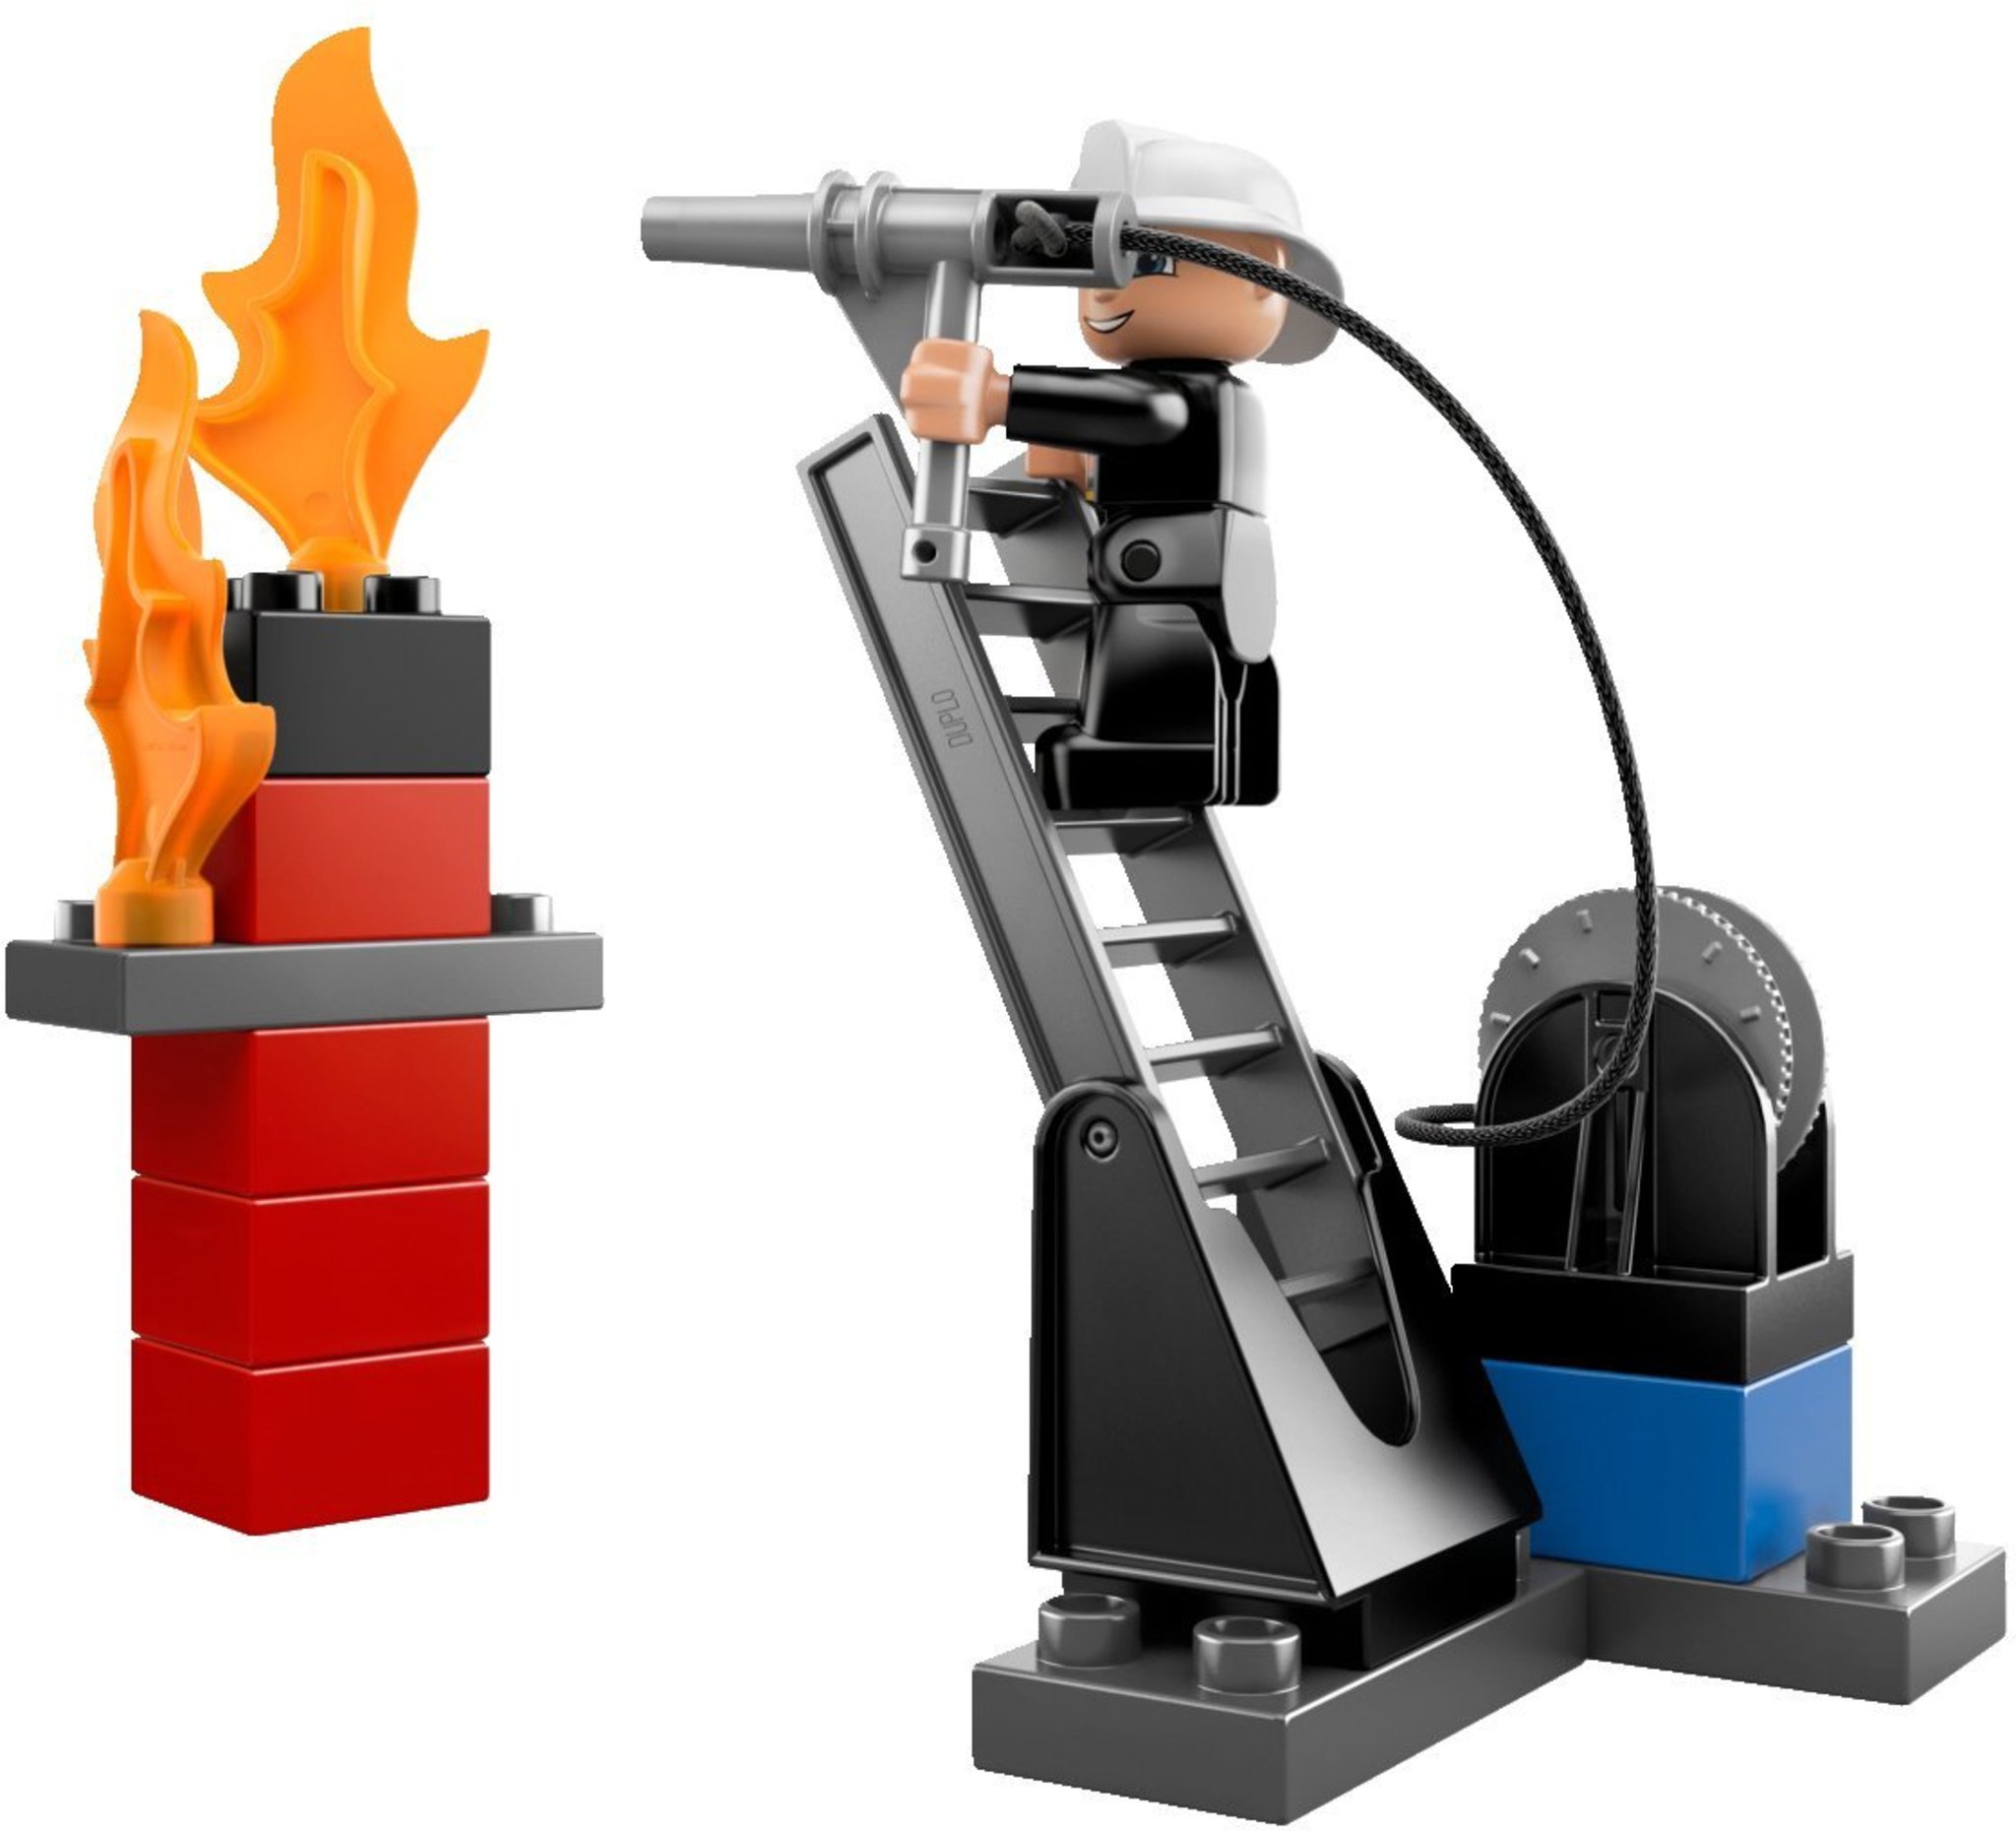 LEGO Duplo Fire Station |